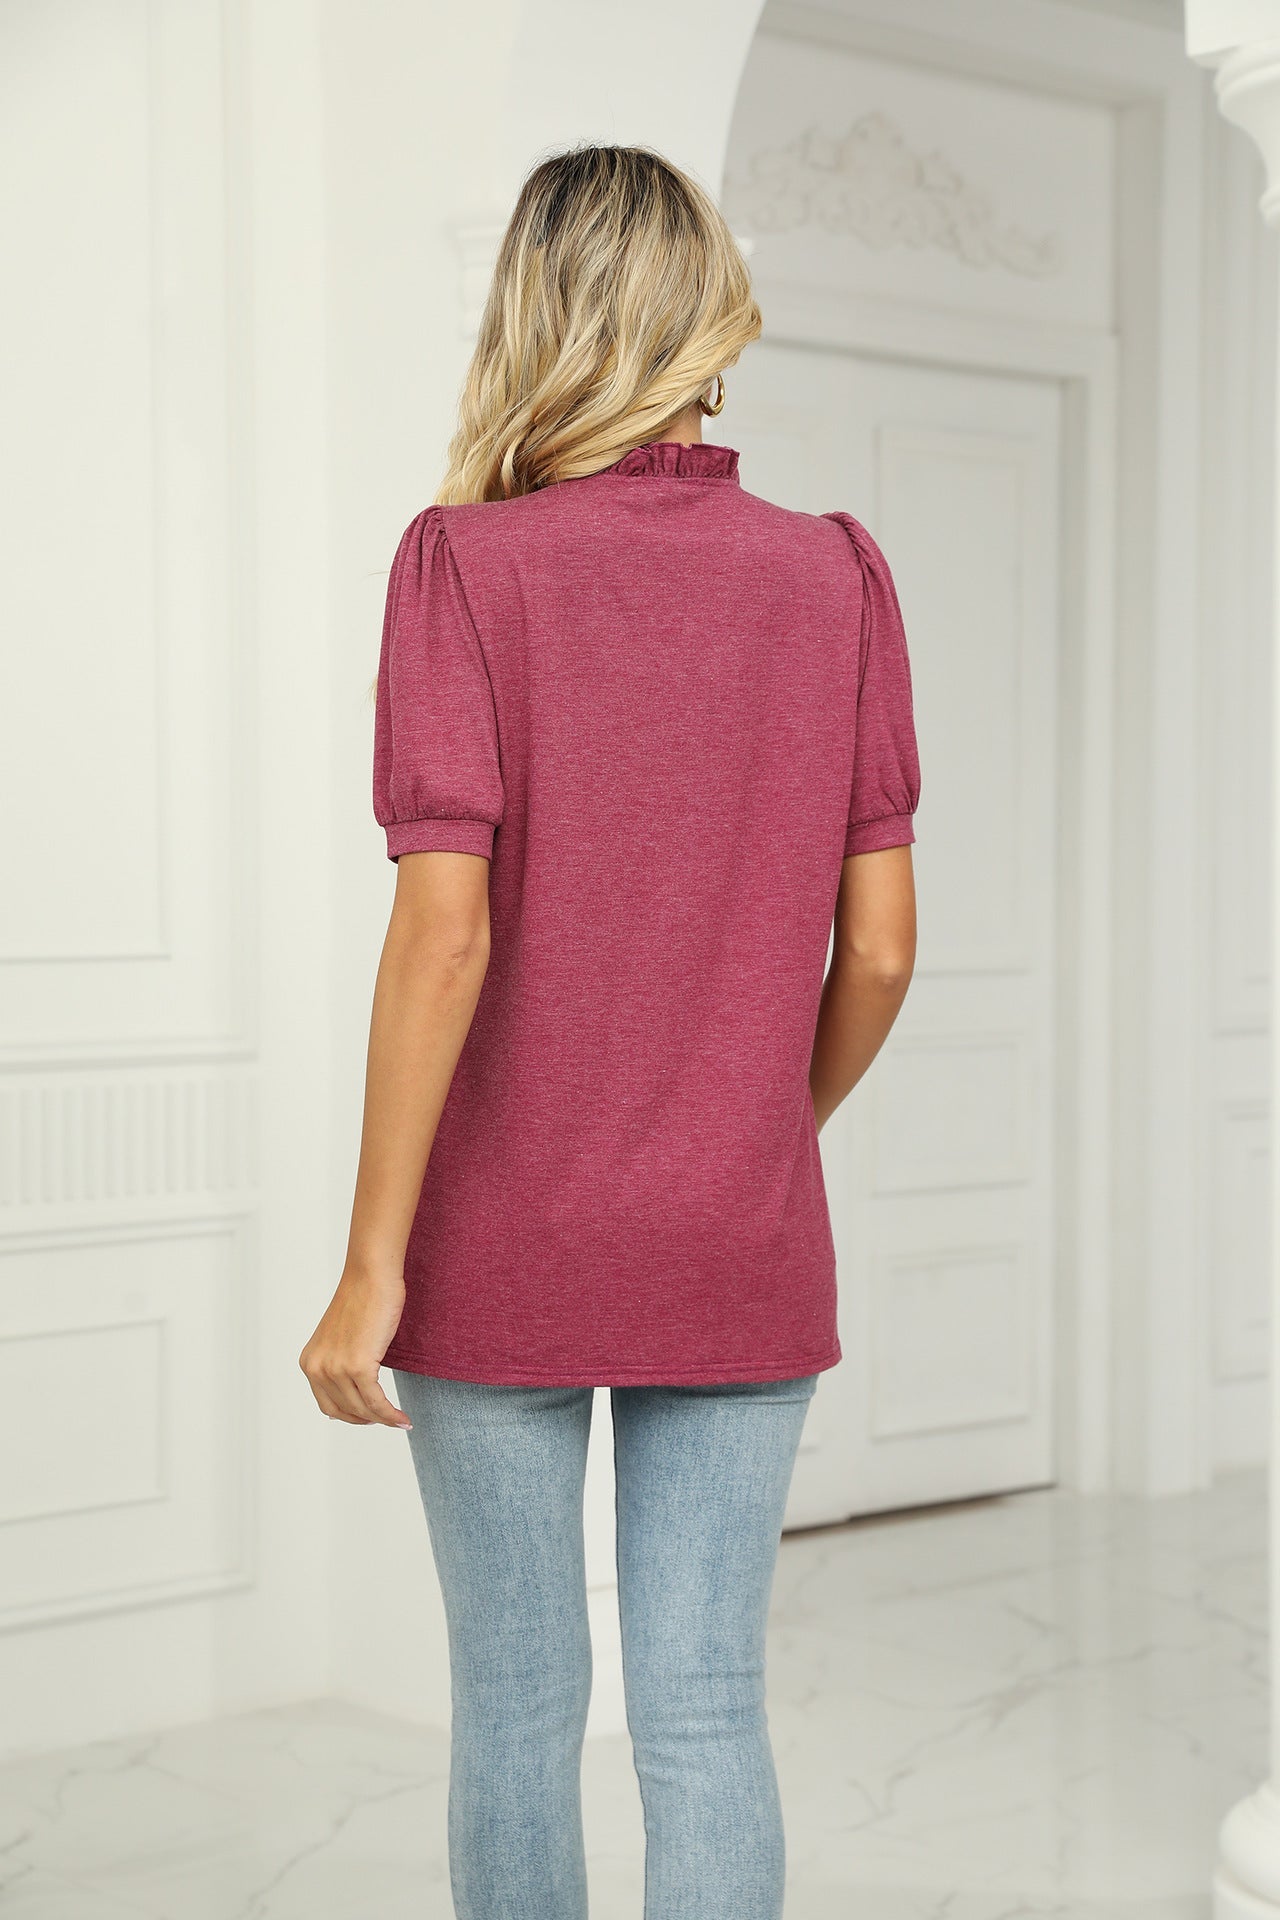 Summer Short Sleeves Women T Shirts-Shirts & Tops-White-S-Free Shipping Leatheretro